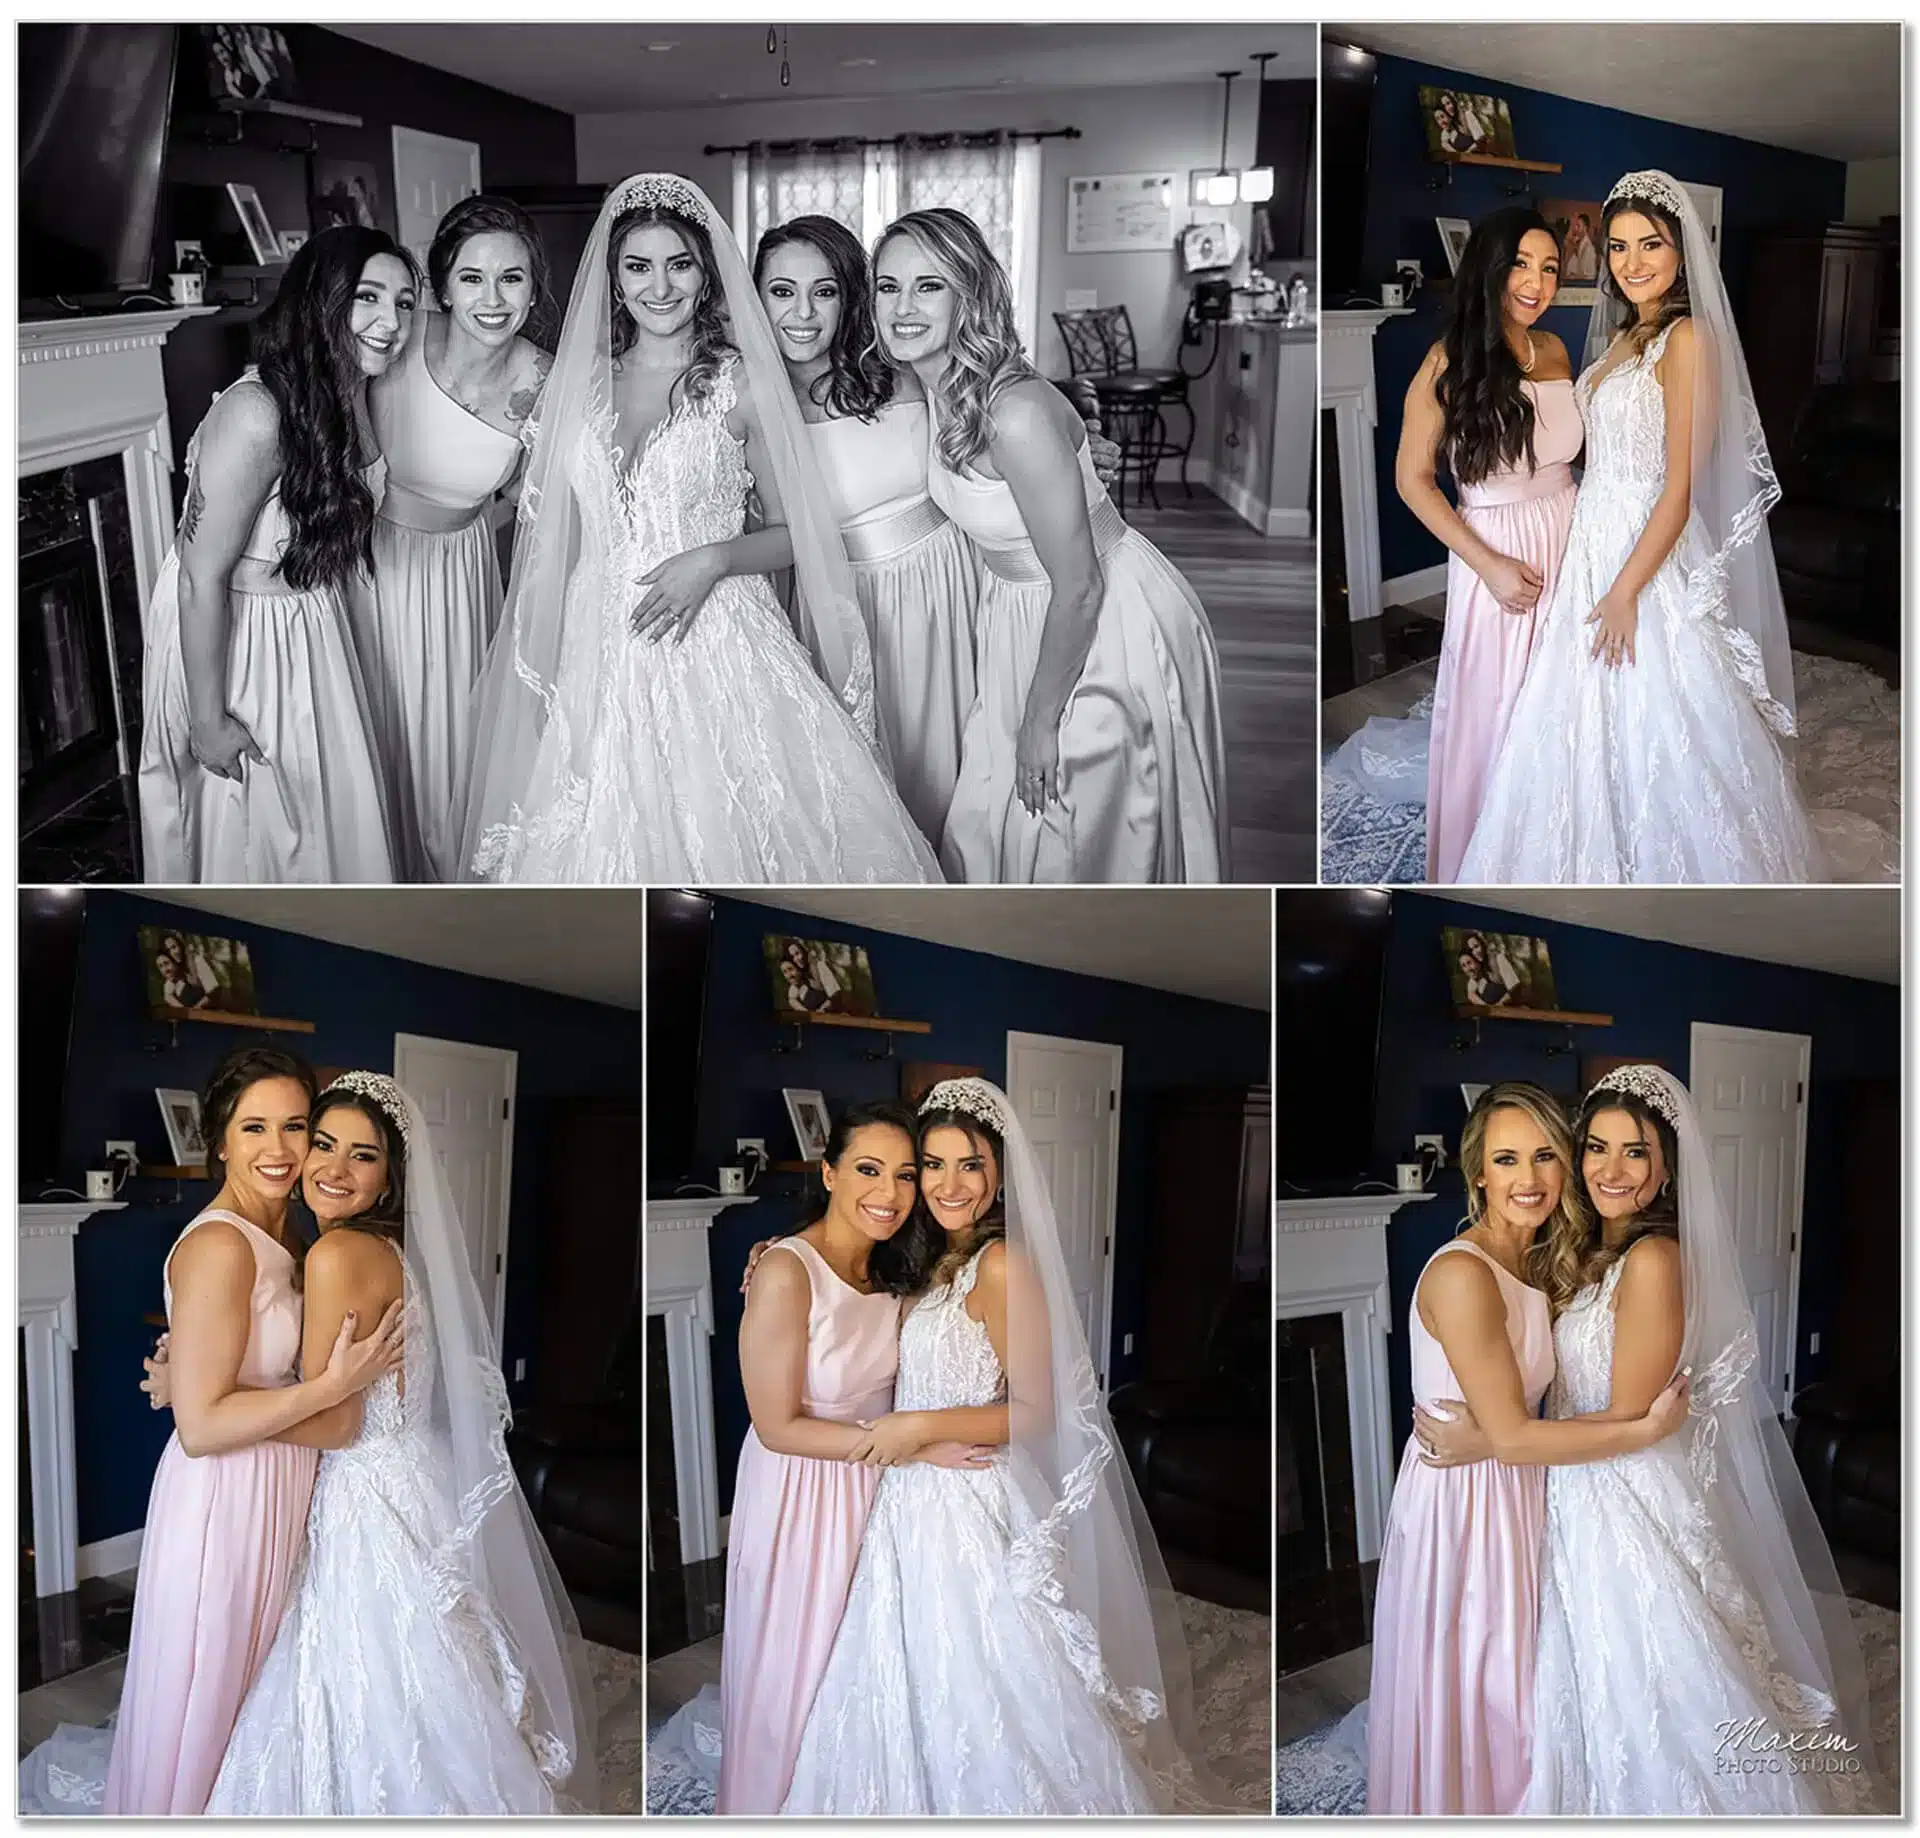 Dayton Wedding Photographers, Lebanese Cincinnati Wedding, Madison Event Center, Roebling Bridge pictures